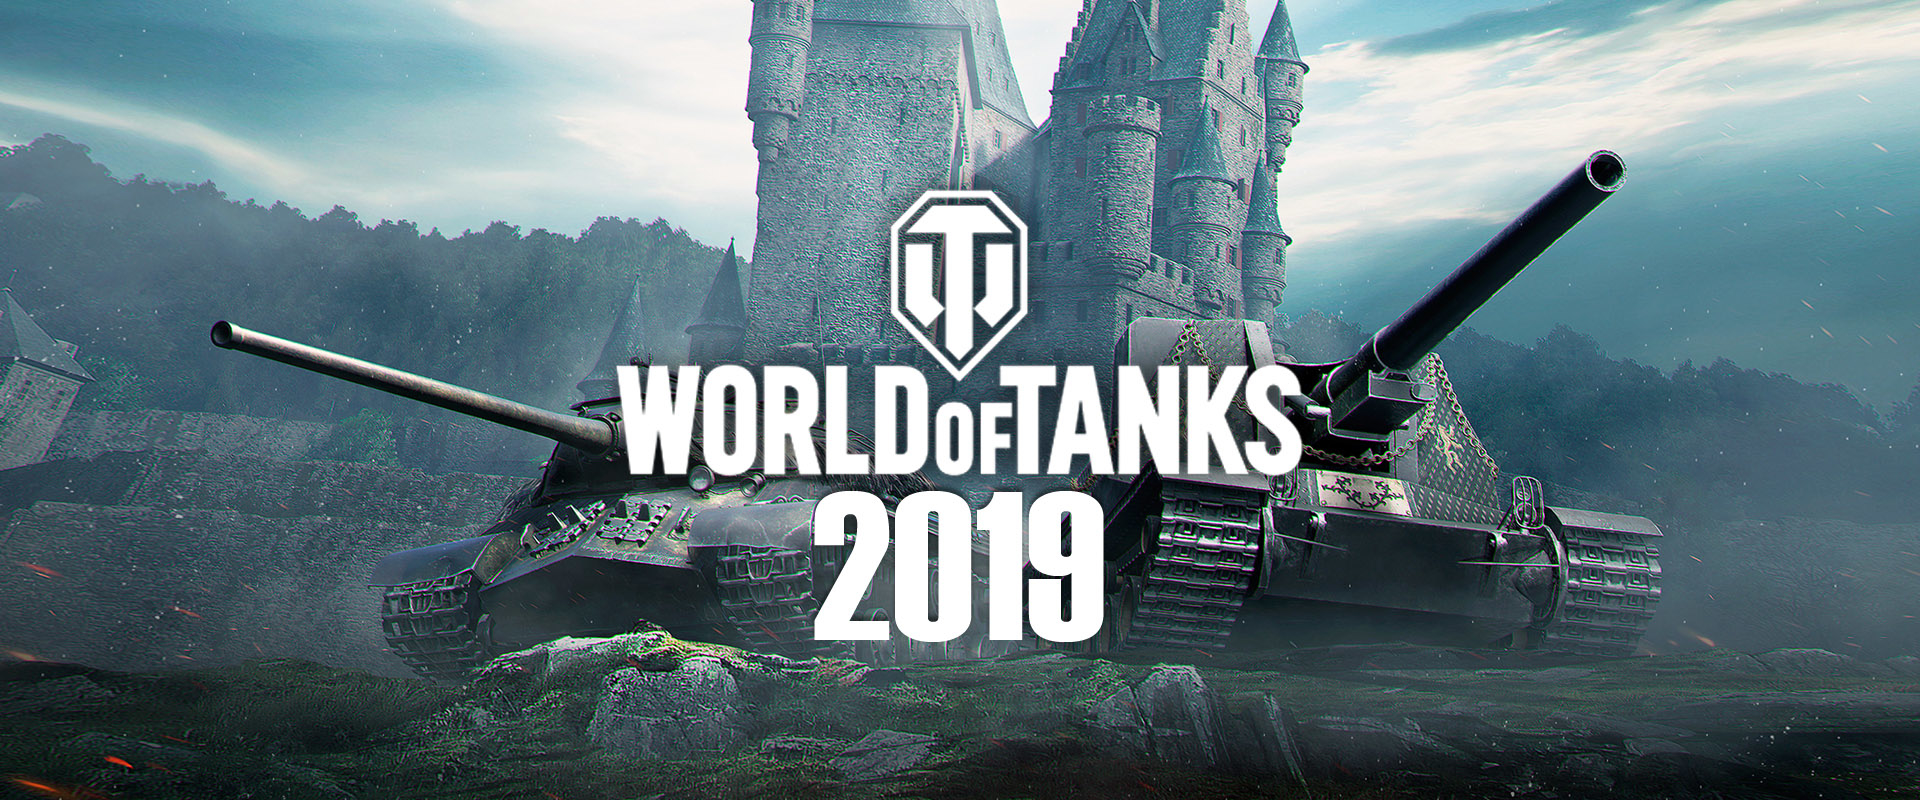 Ilyen lesz a World of Tanks 2019-ben!